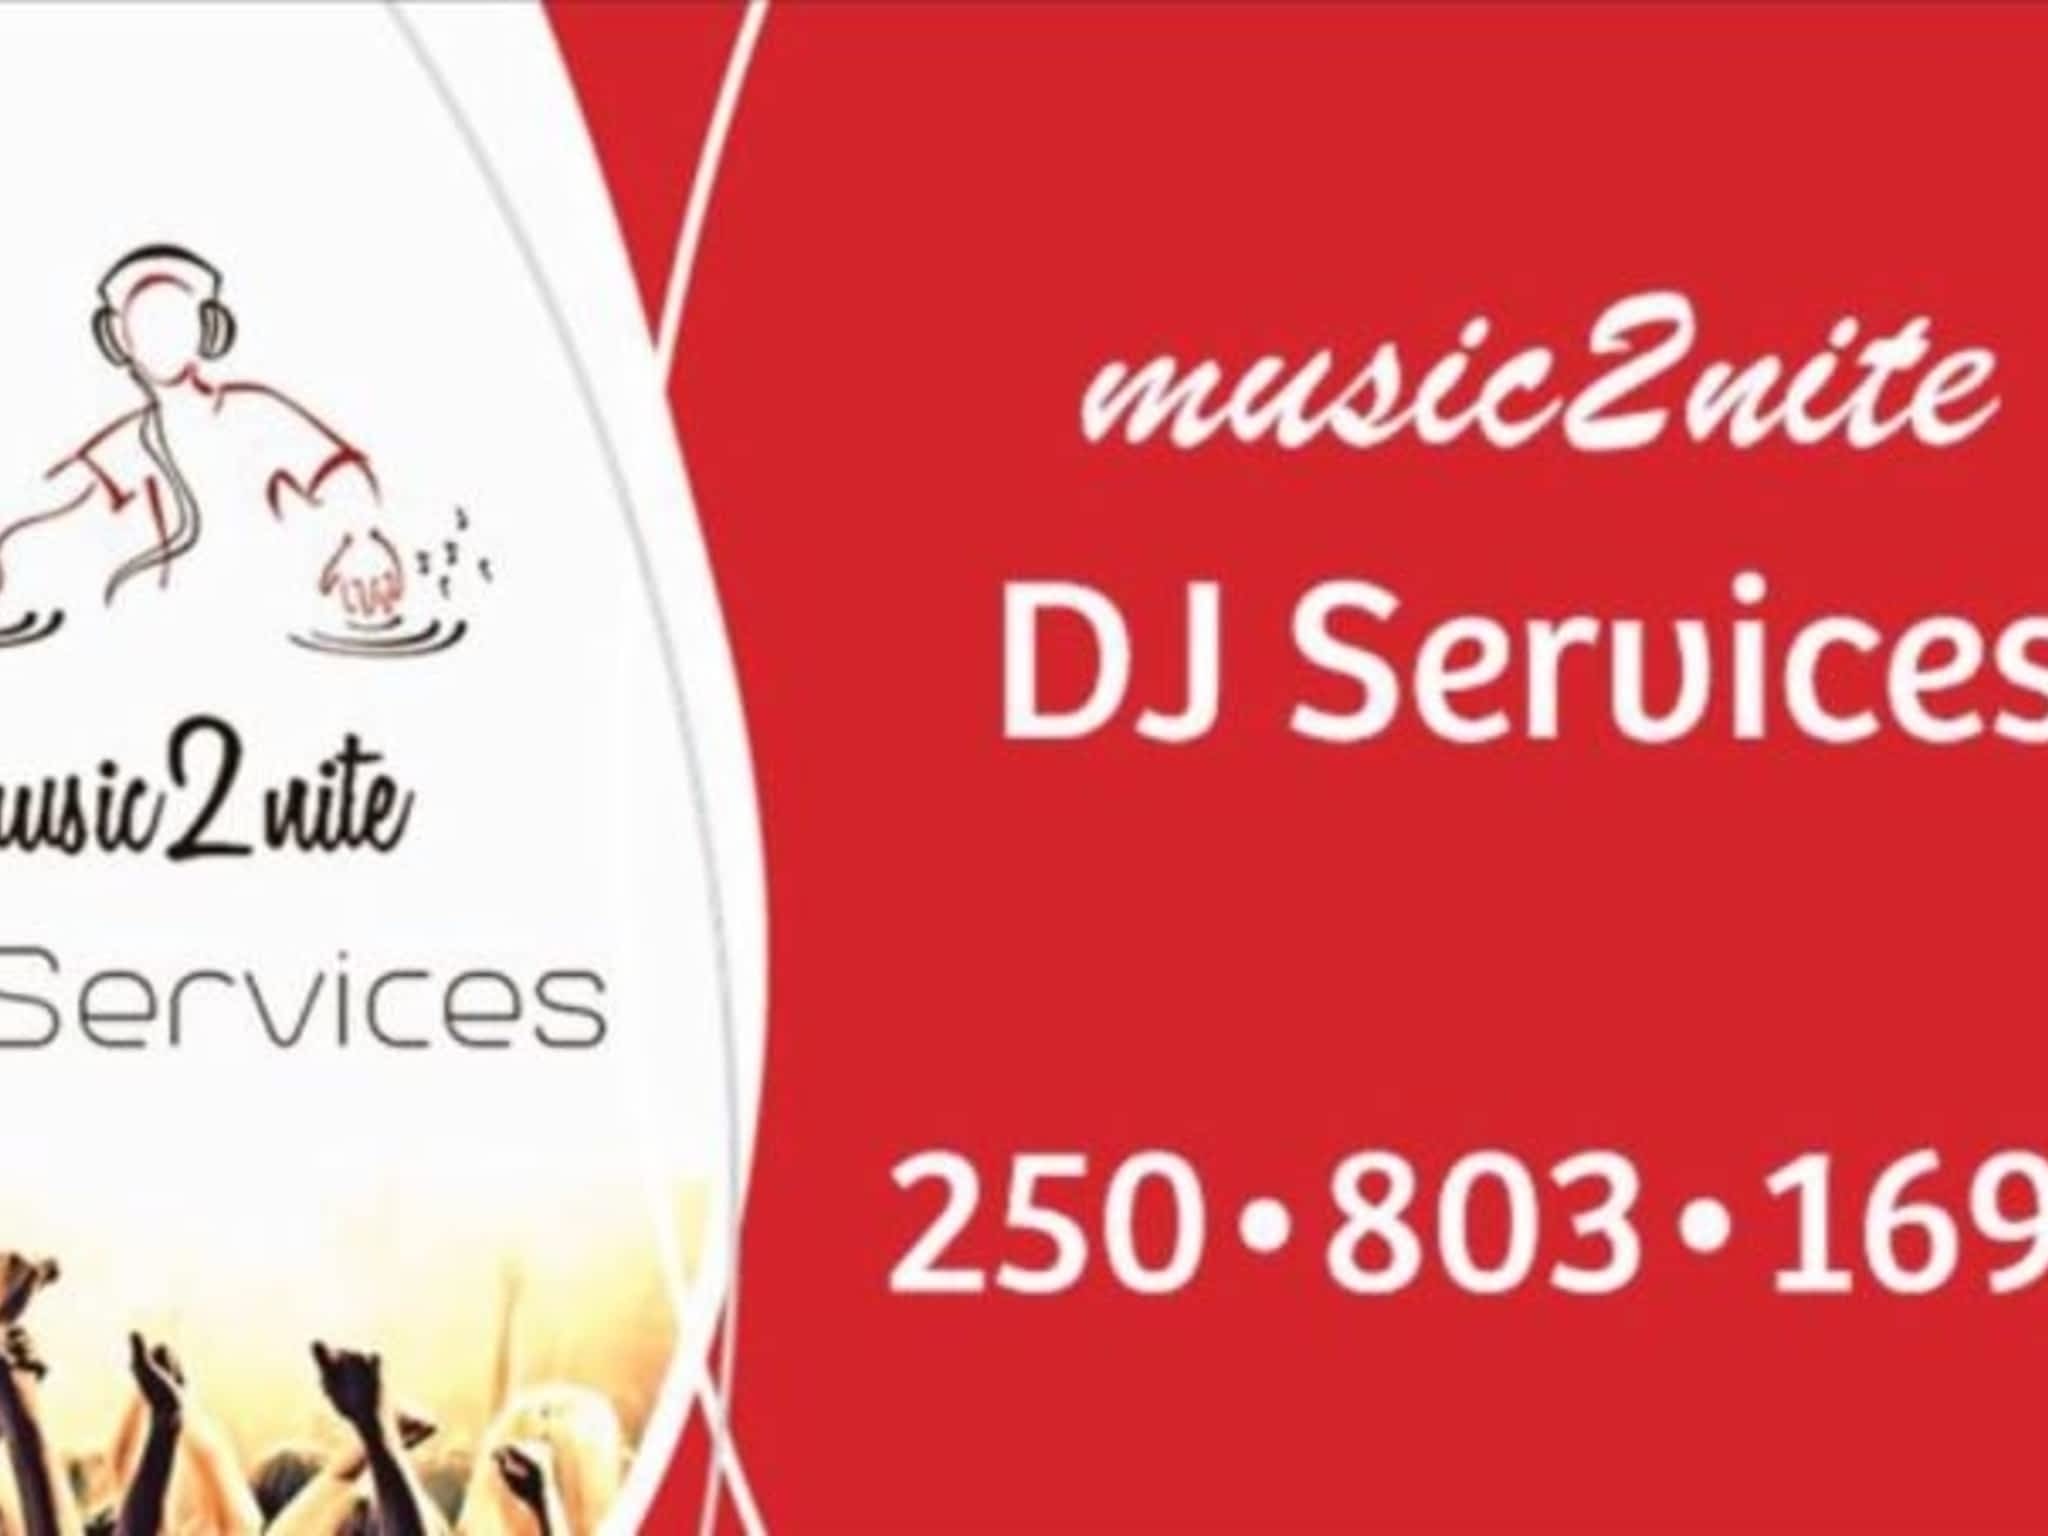 photo Music2nite DJ Services